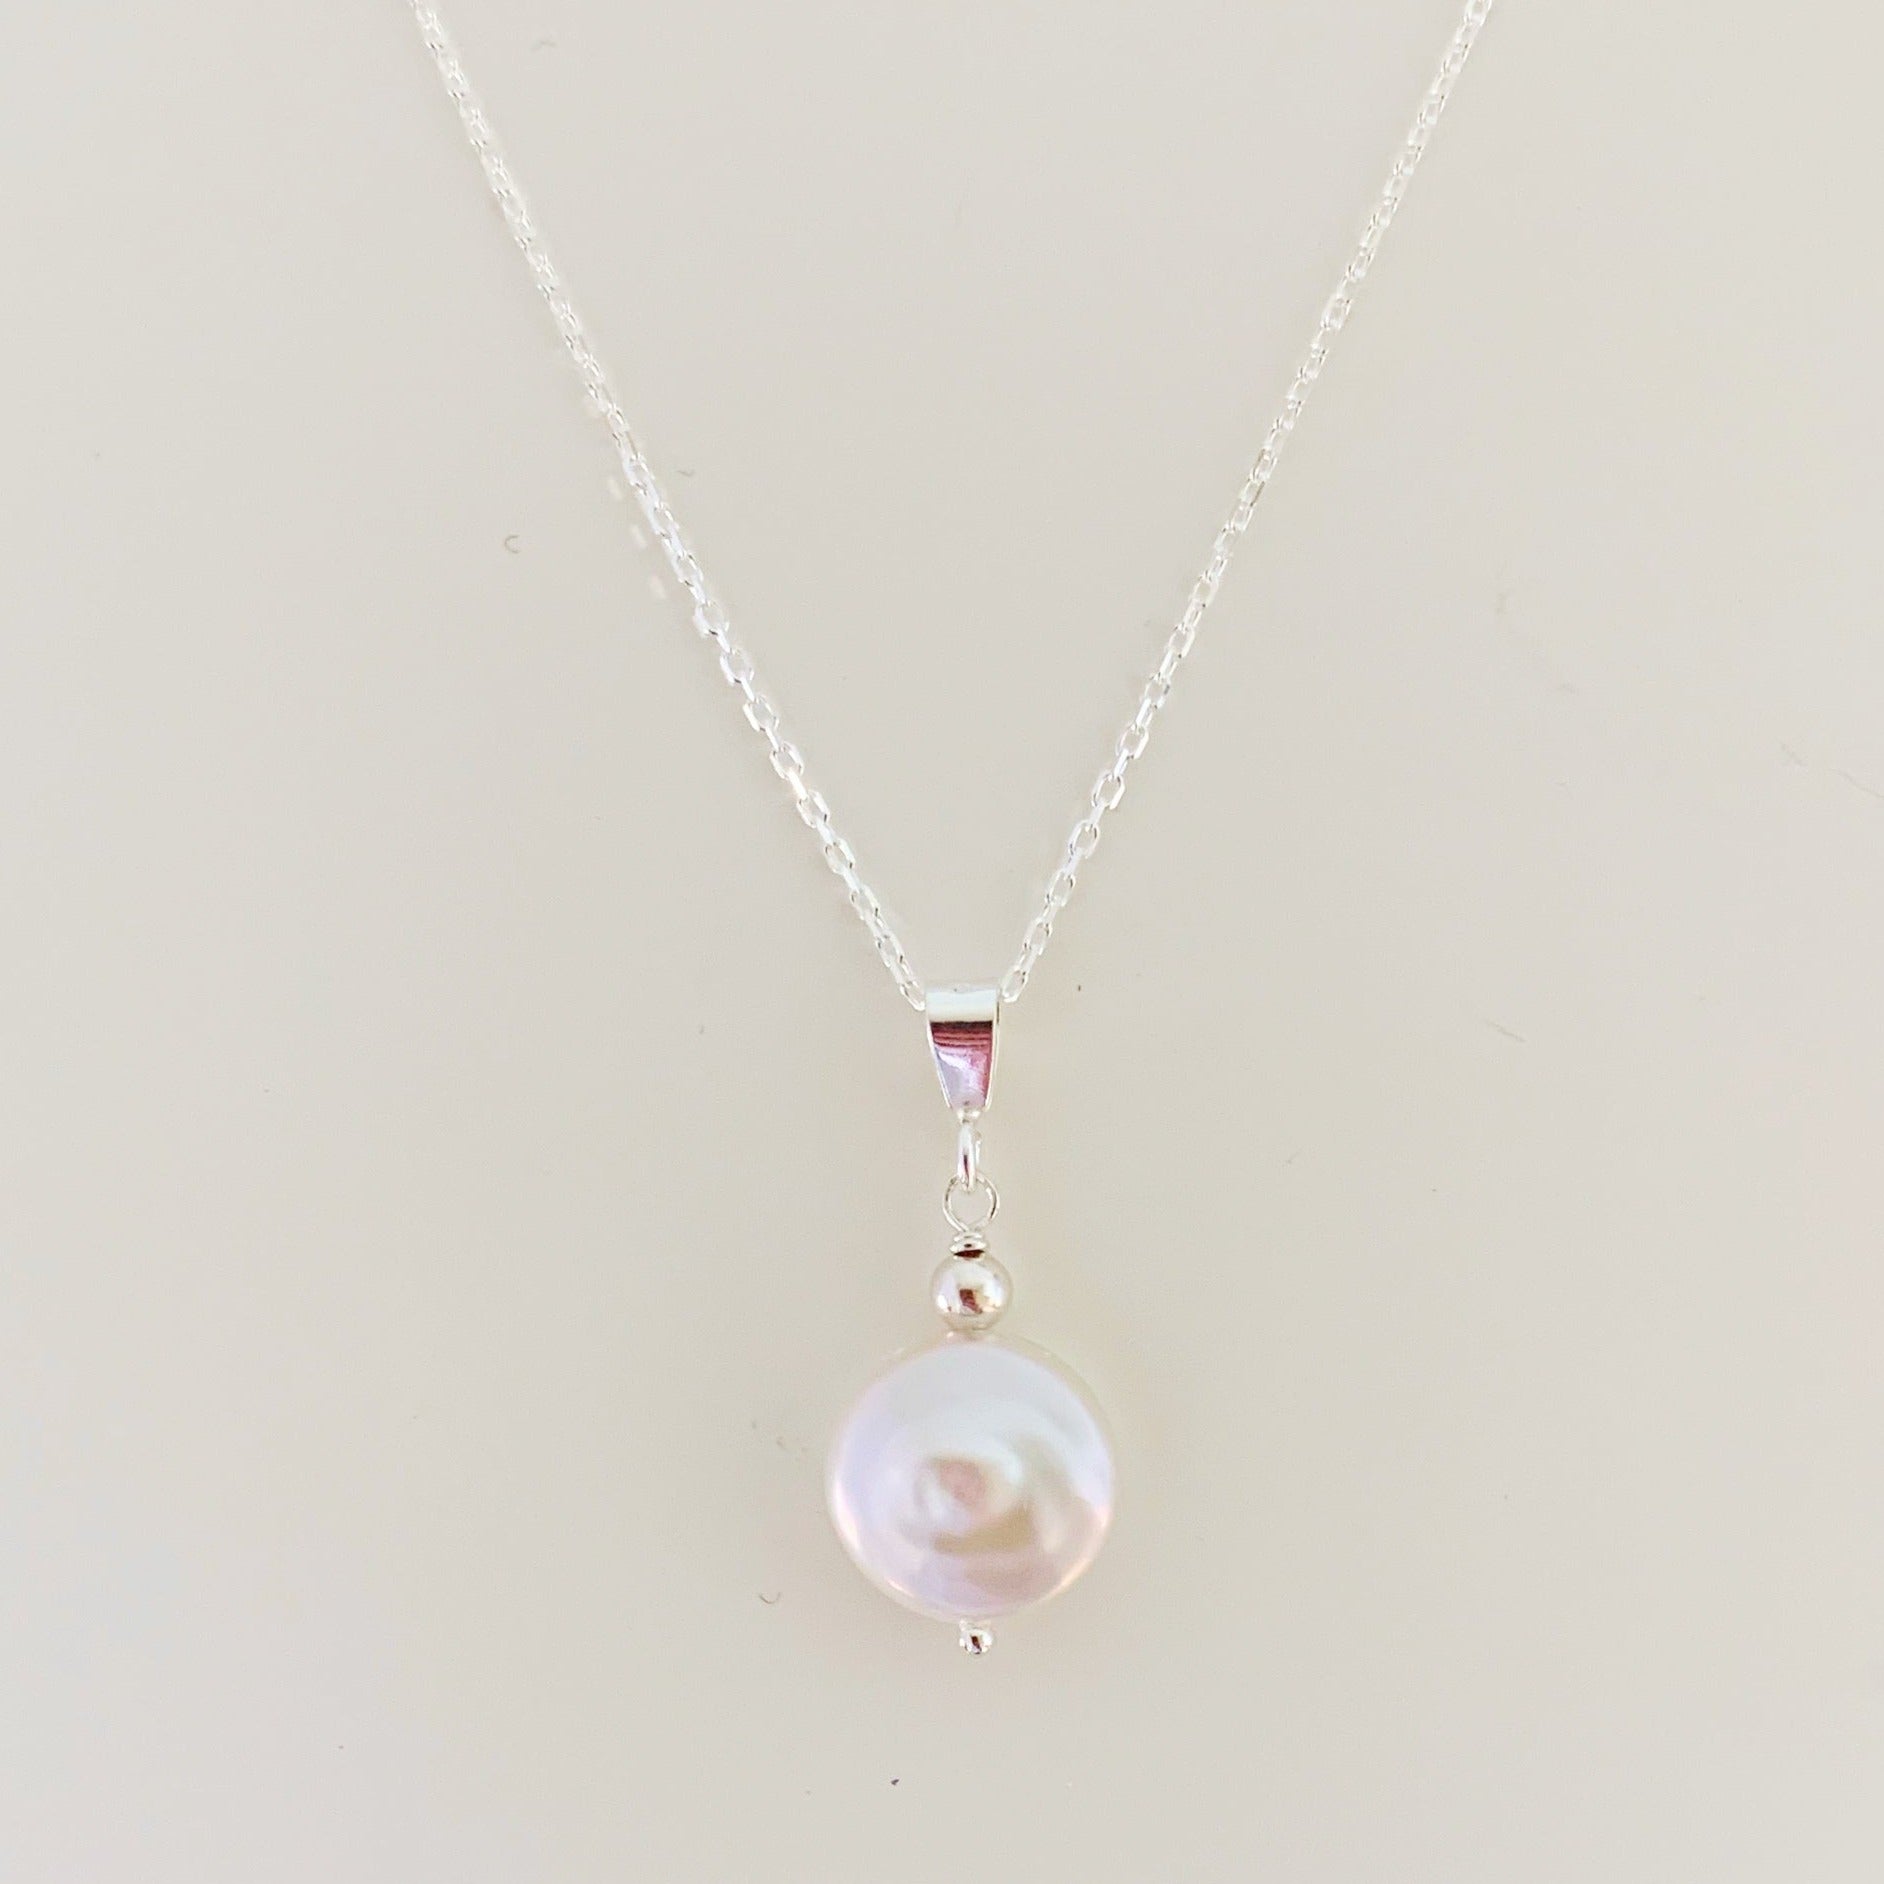 Gems One Black Pearl Pendant 230554 - Sami Fine Jewelry